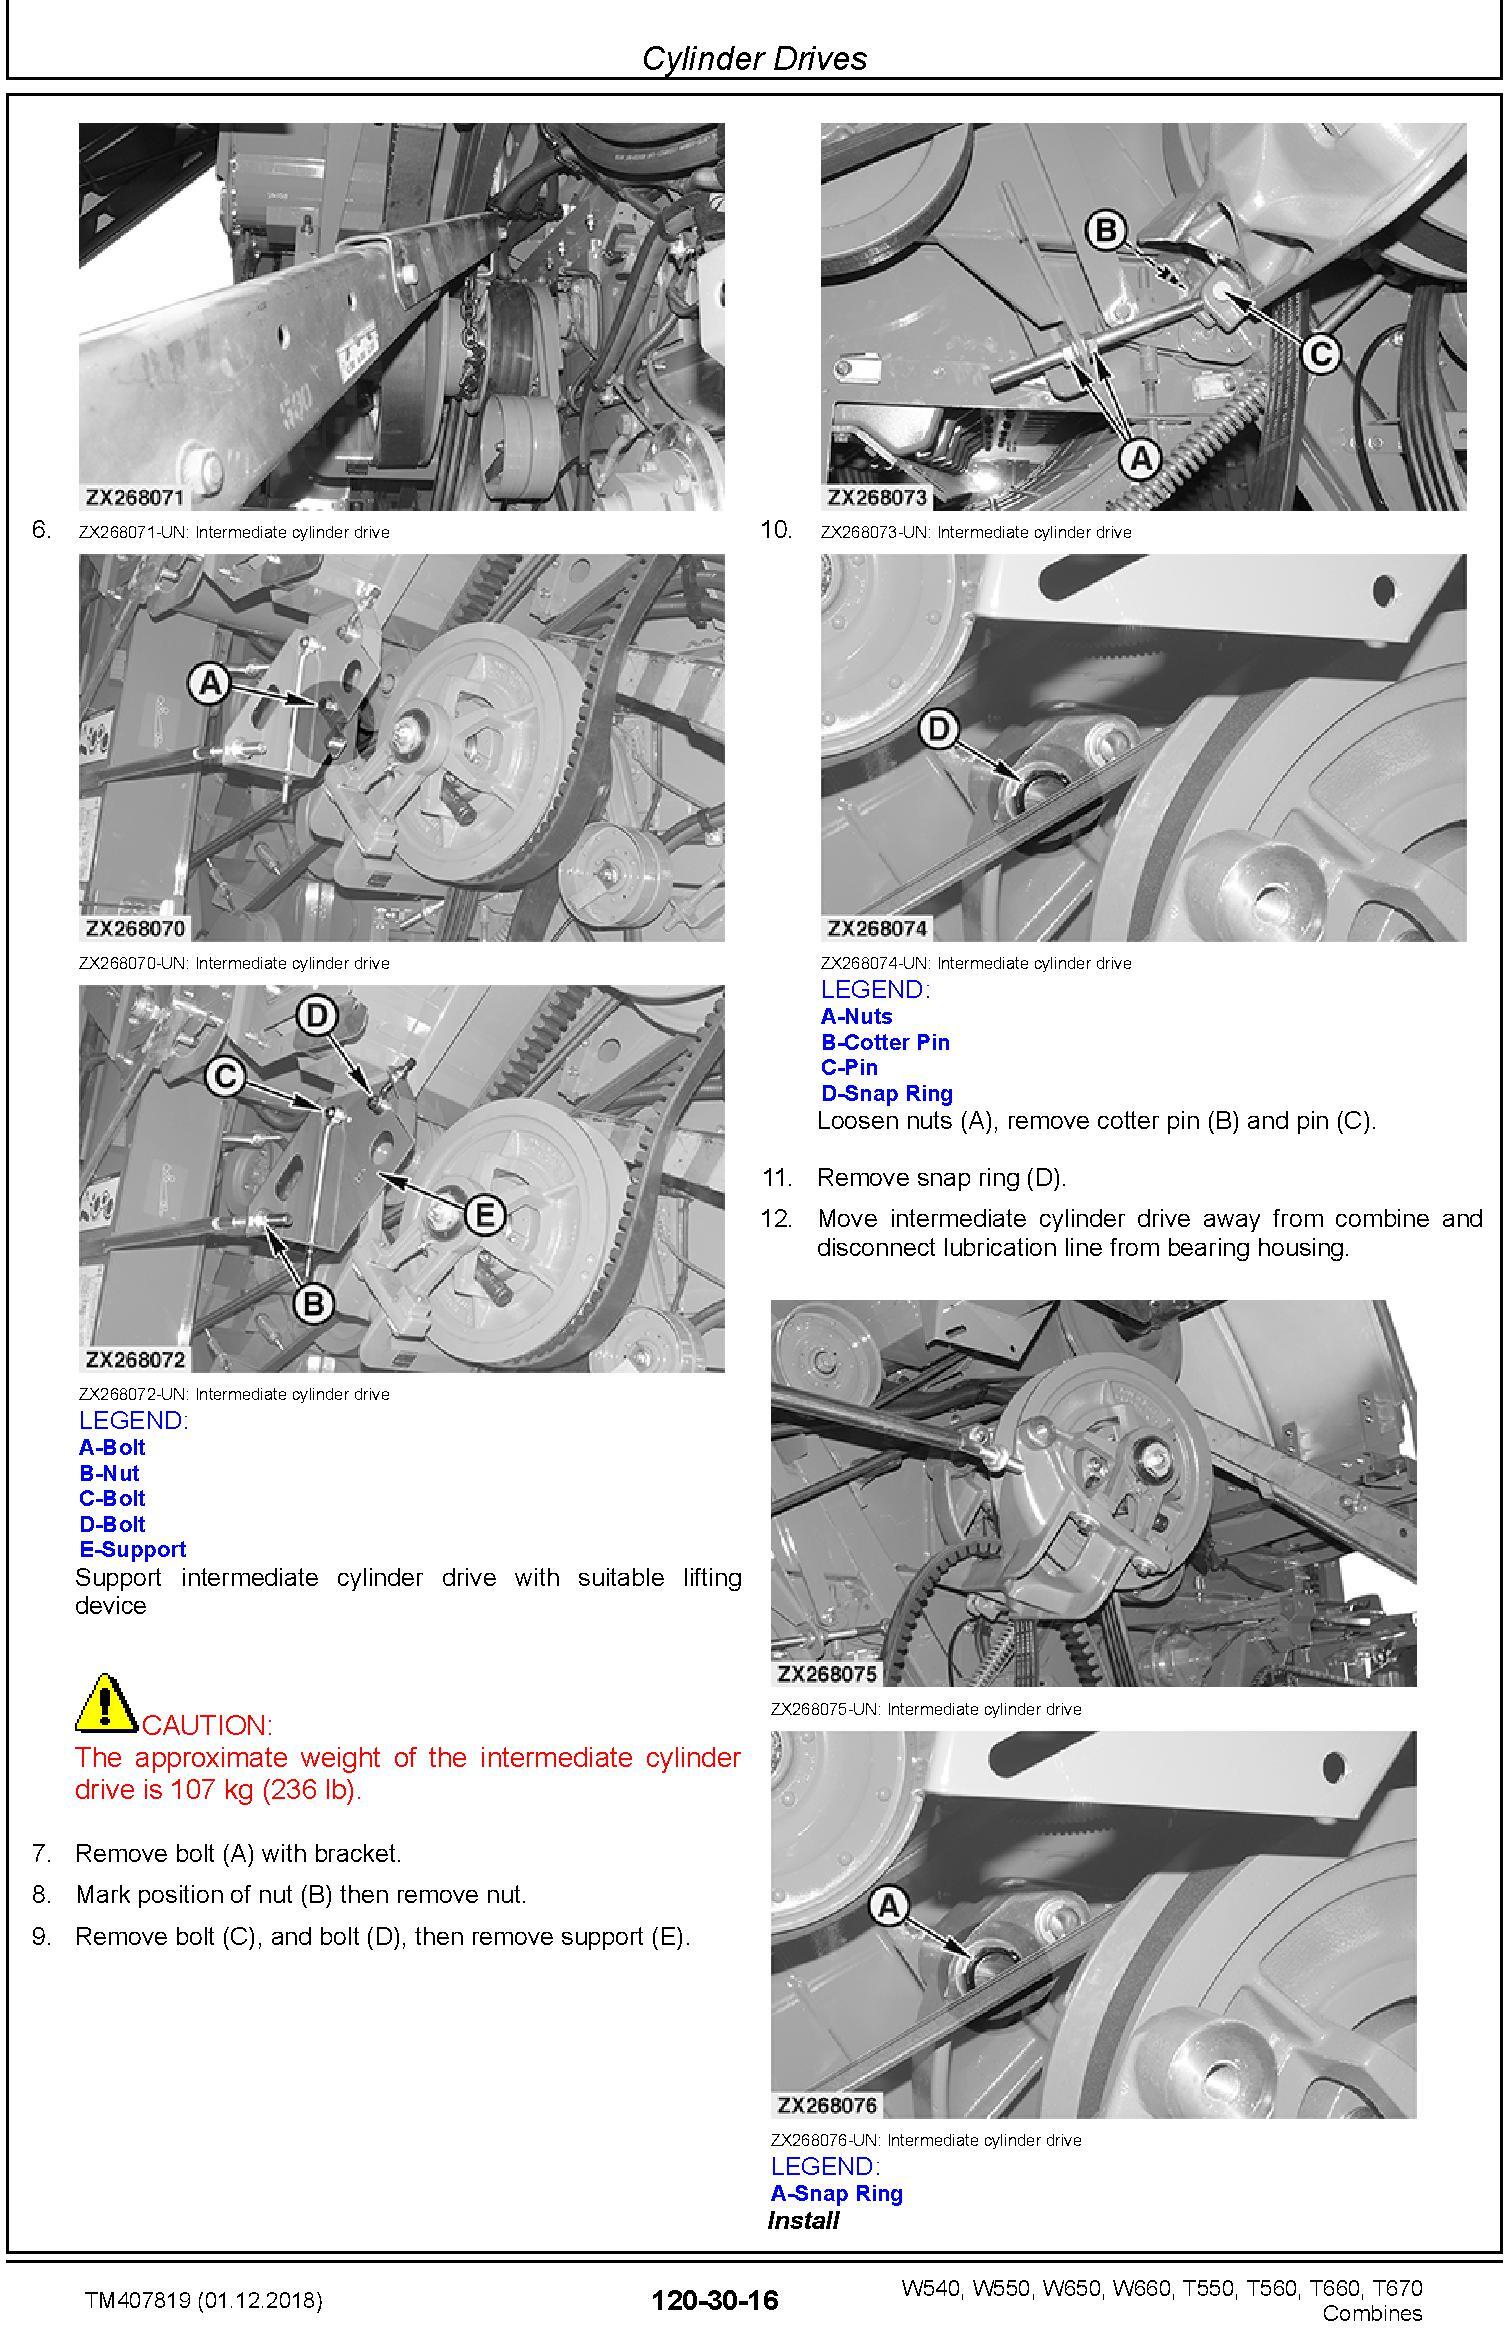  John Deere W540, W550, W650, W660, T550, T560, T660, T670 Combine Repair Technical Manual (TM407819) - 2